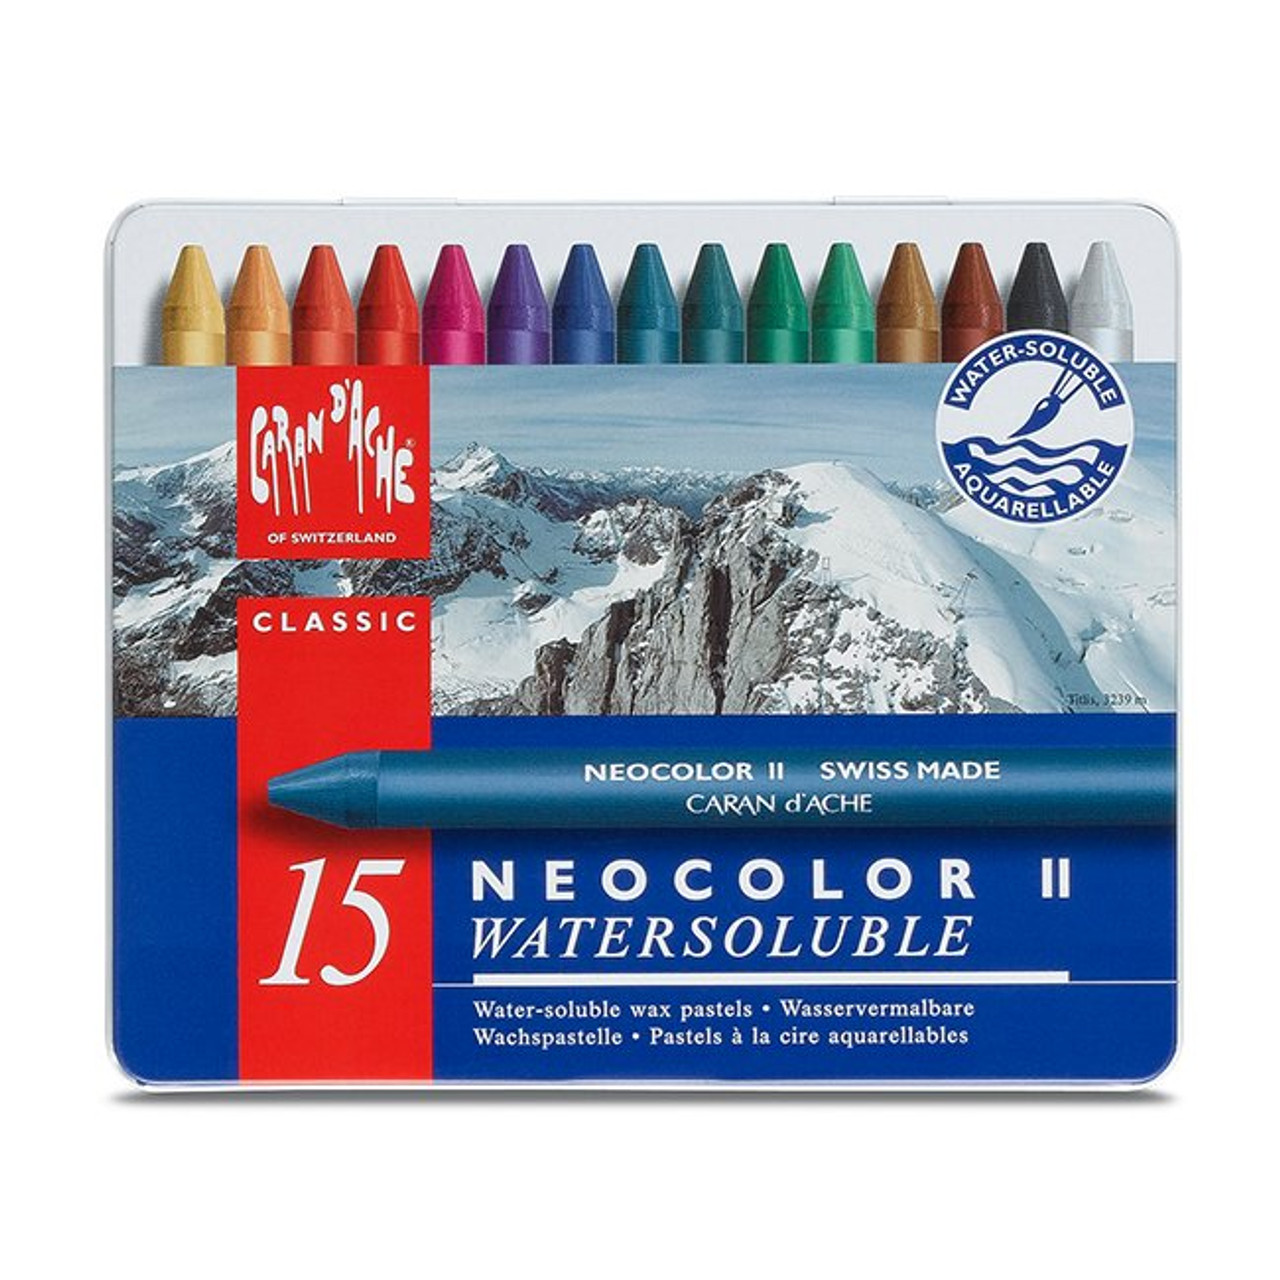 Neocolor II Artists' Crayon Sets